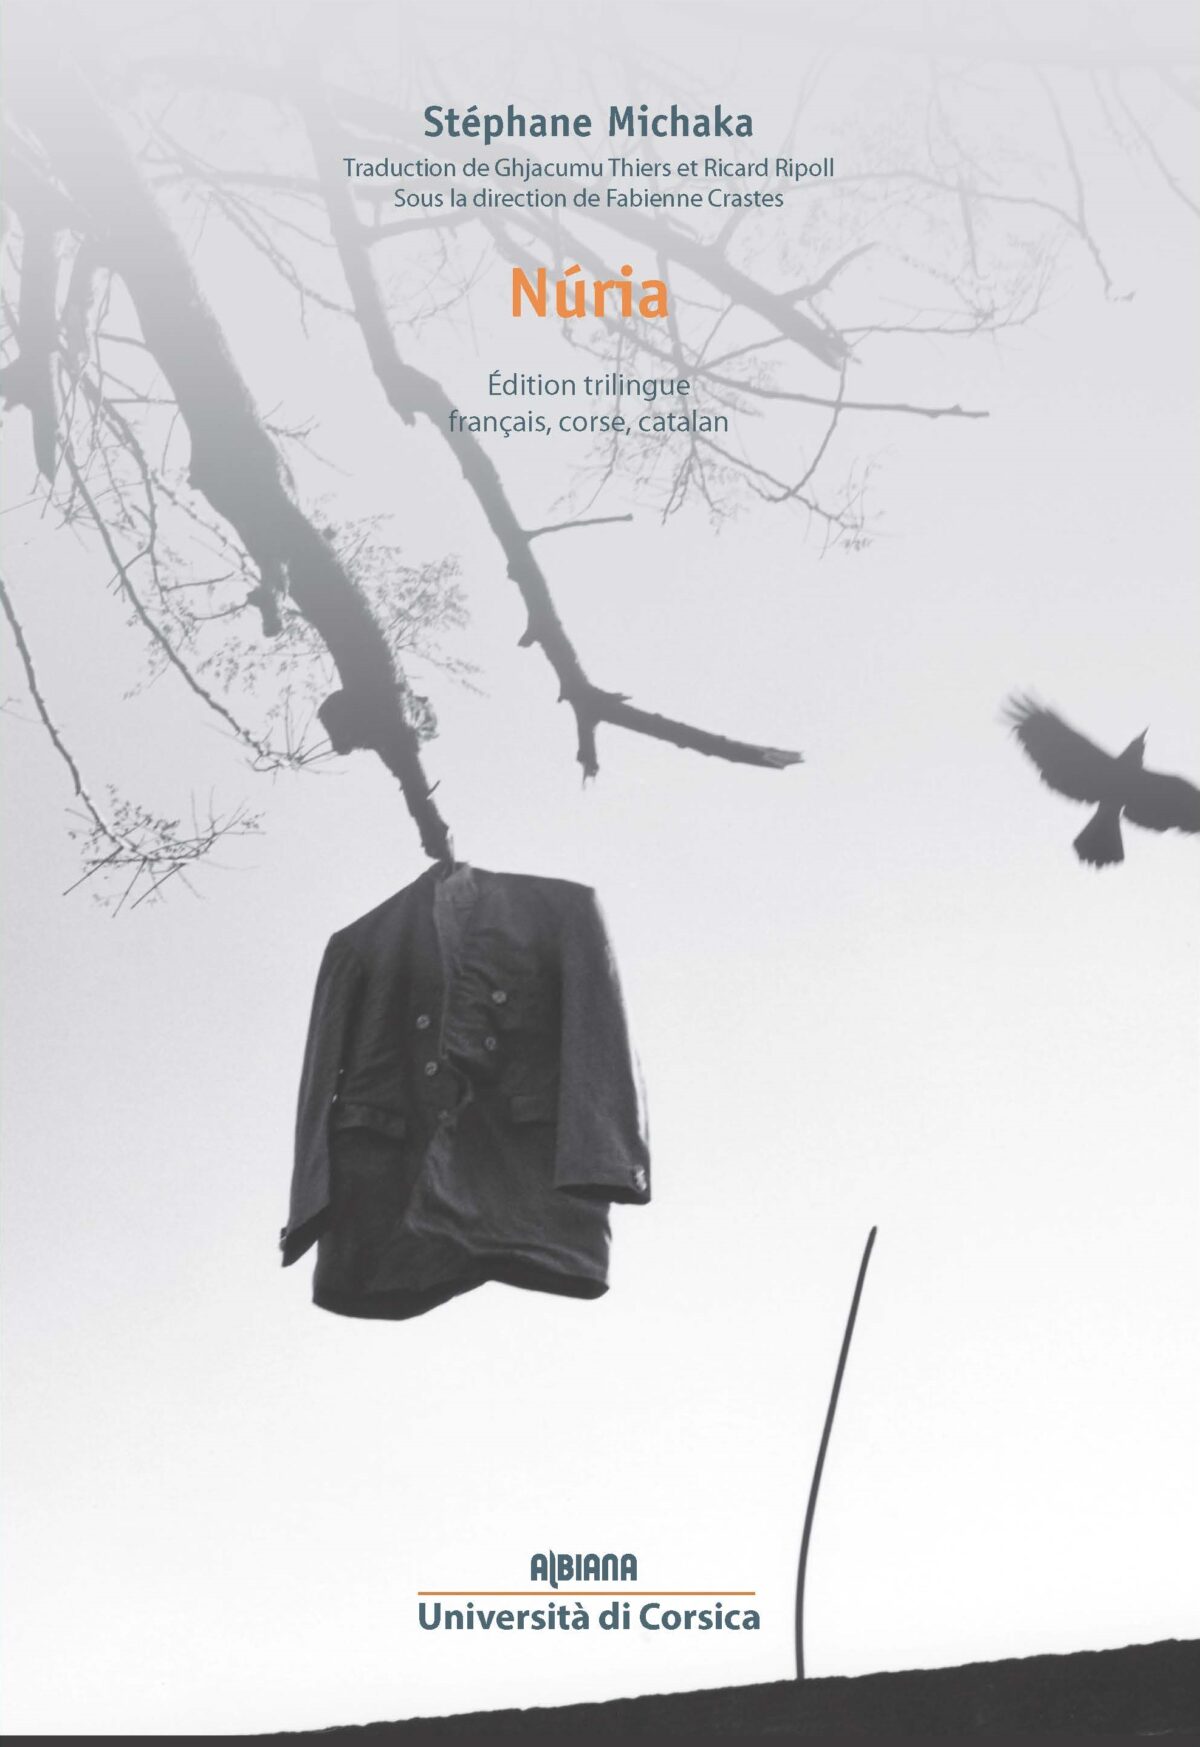 Núria, Édition trilingue français, corse, catalan, Traduction de Ghjacumu Thiers et Ricard Ripoll, Albiana, 2023.